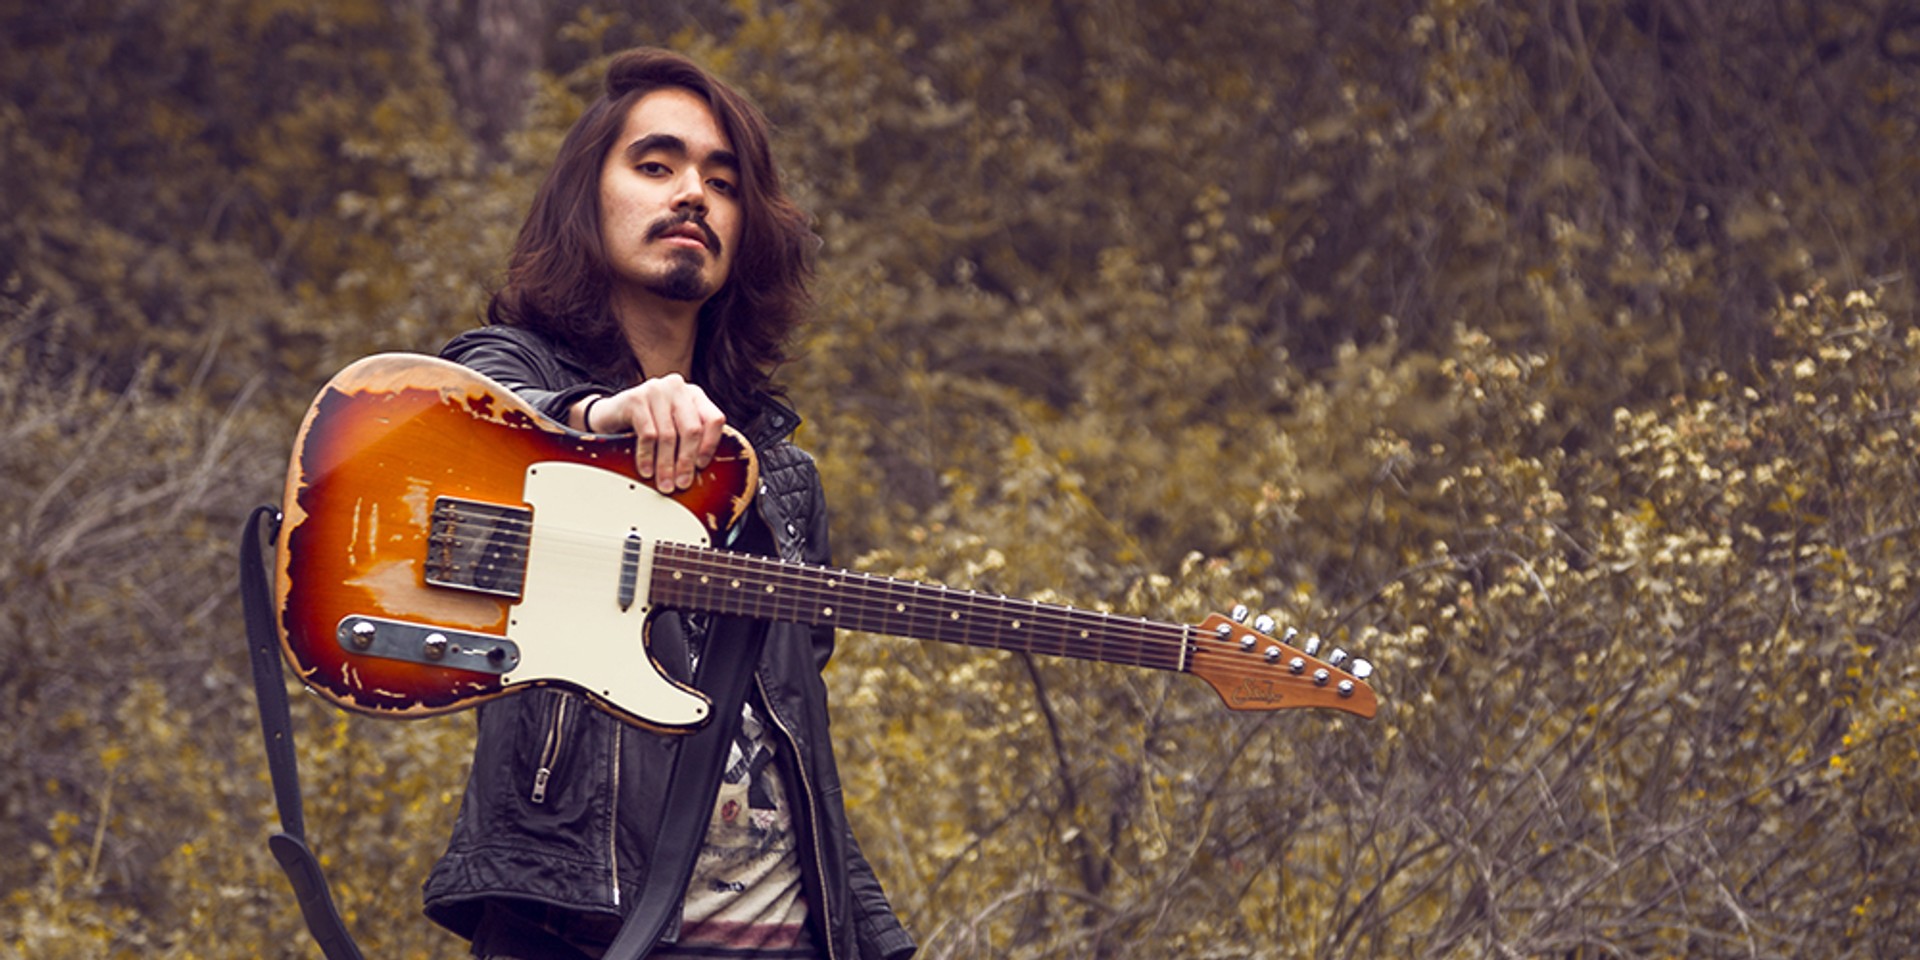 Guitar virtuoso Mateus Asato to conduct clinic in Singapore